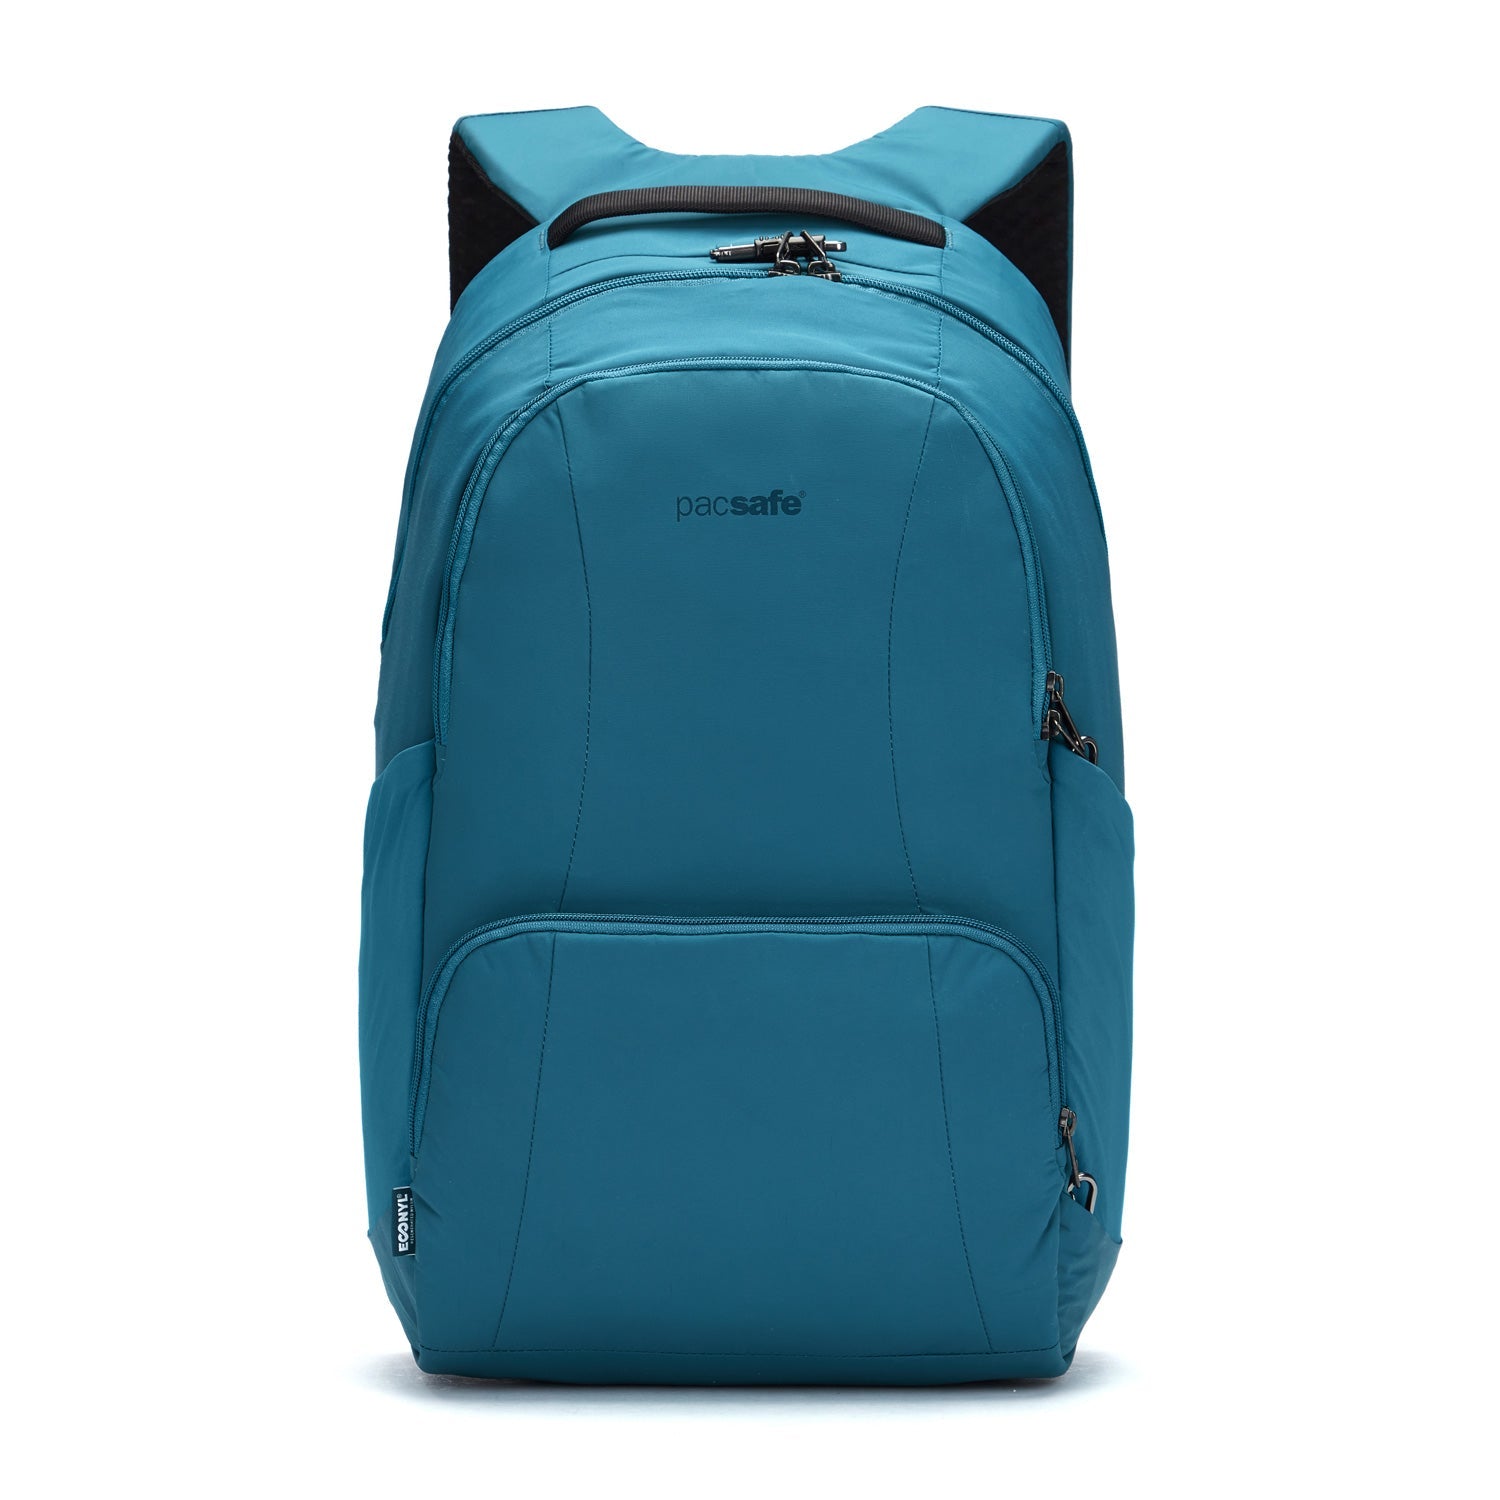 Pacsafe - LS450 Backpack Tidal - Teal-1